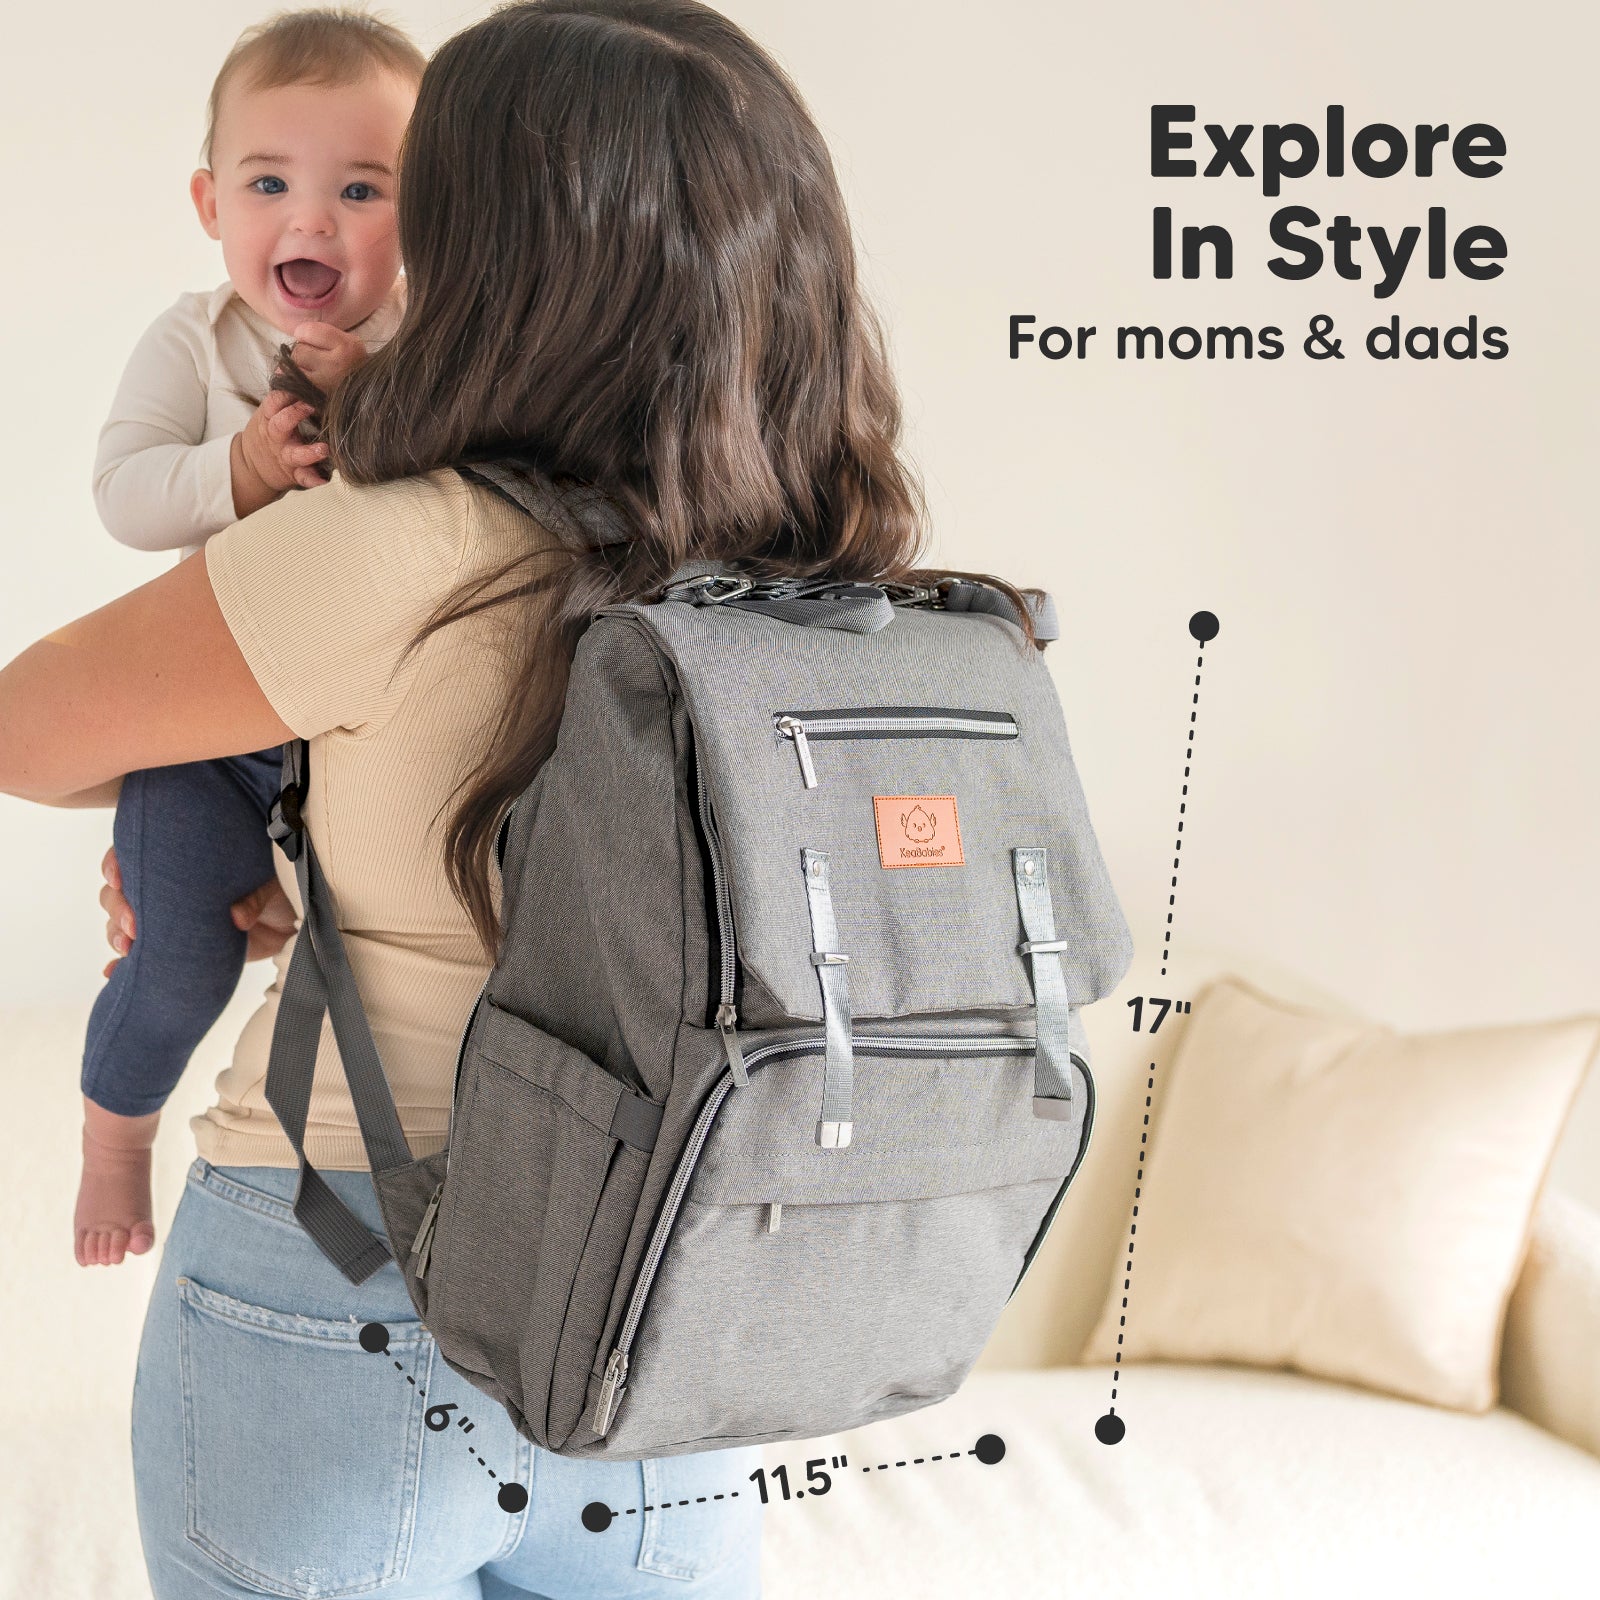 KeaBabies Explorer Diaper Bag Backpack, Baby Bags, Changing Pad, Stroller Straps - image 5 of 10